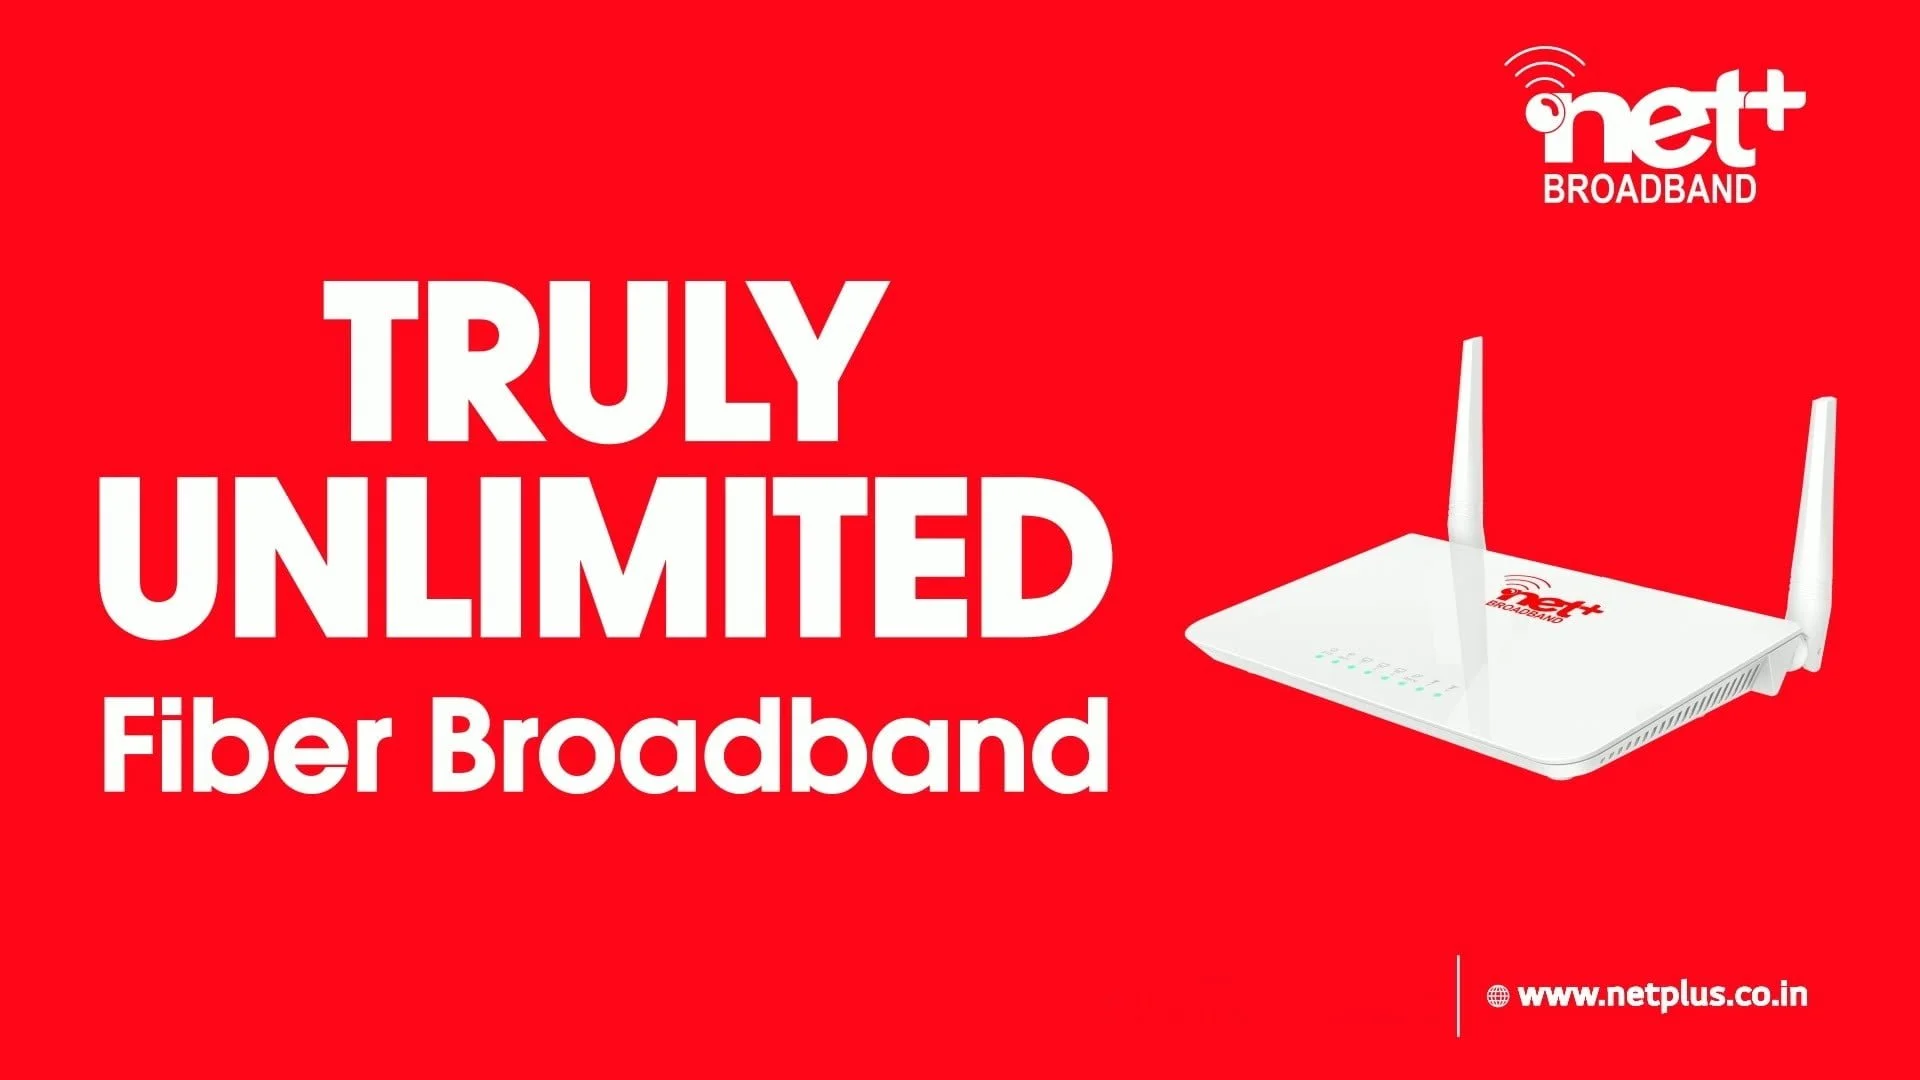 Net Plus Broadband